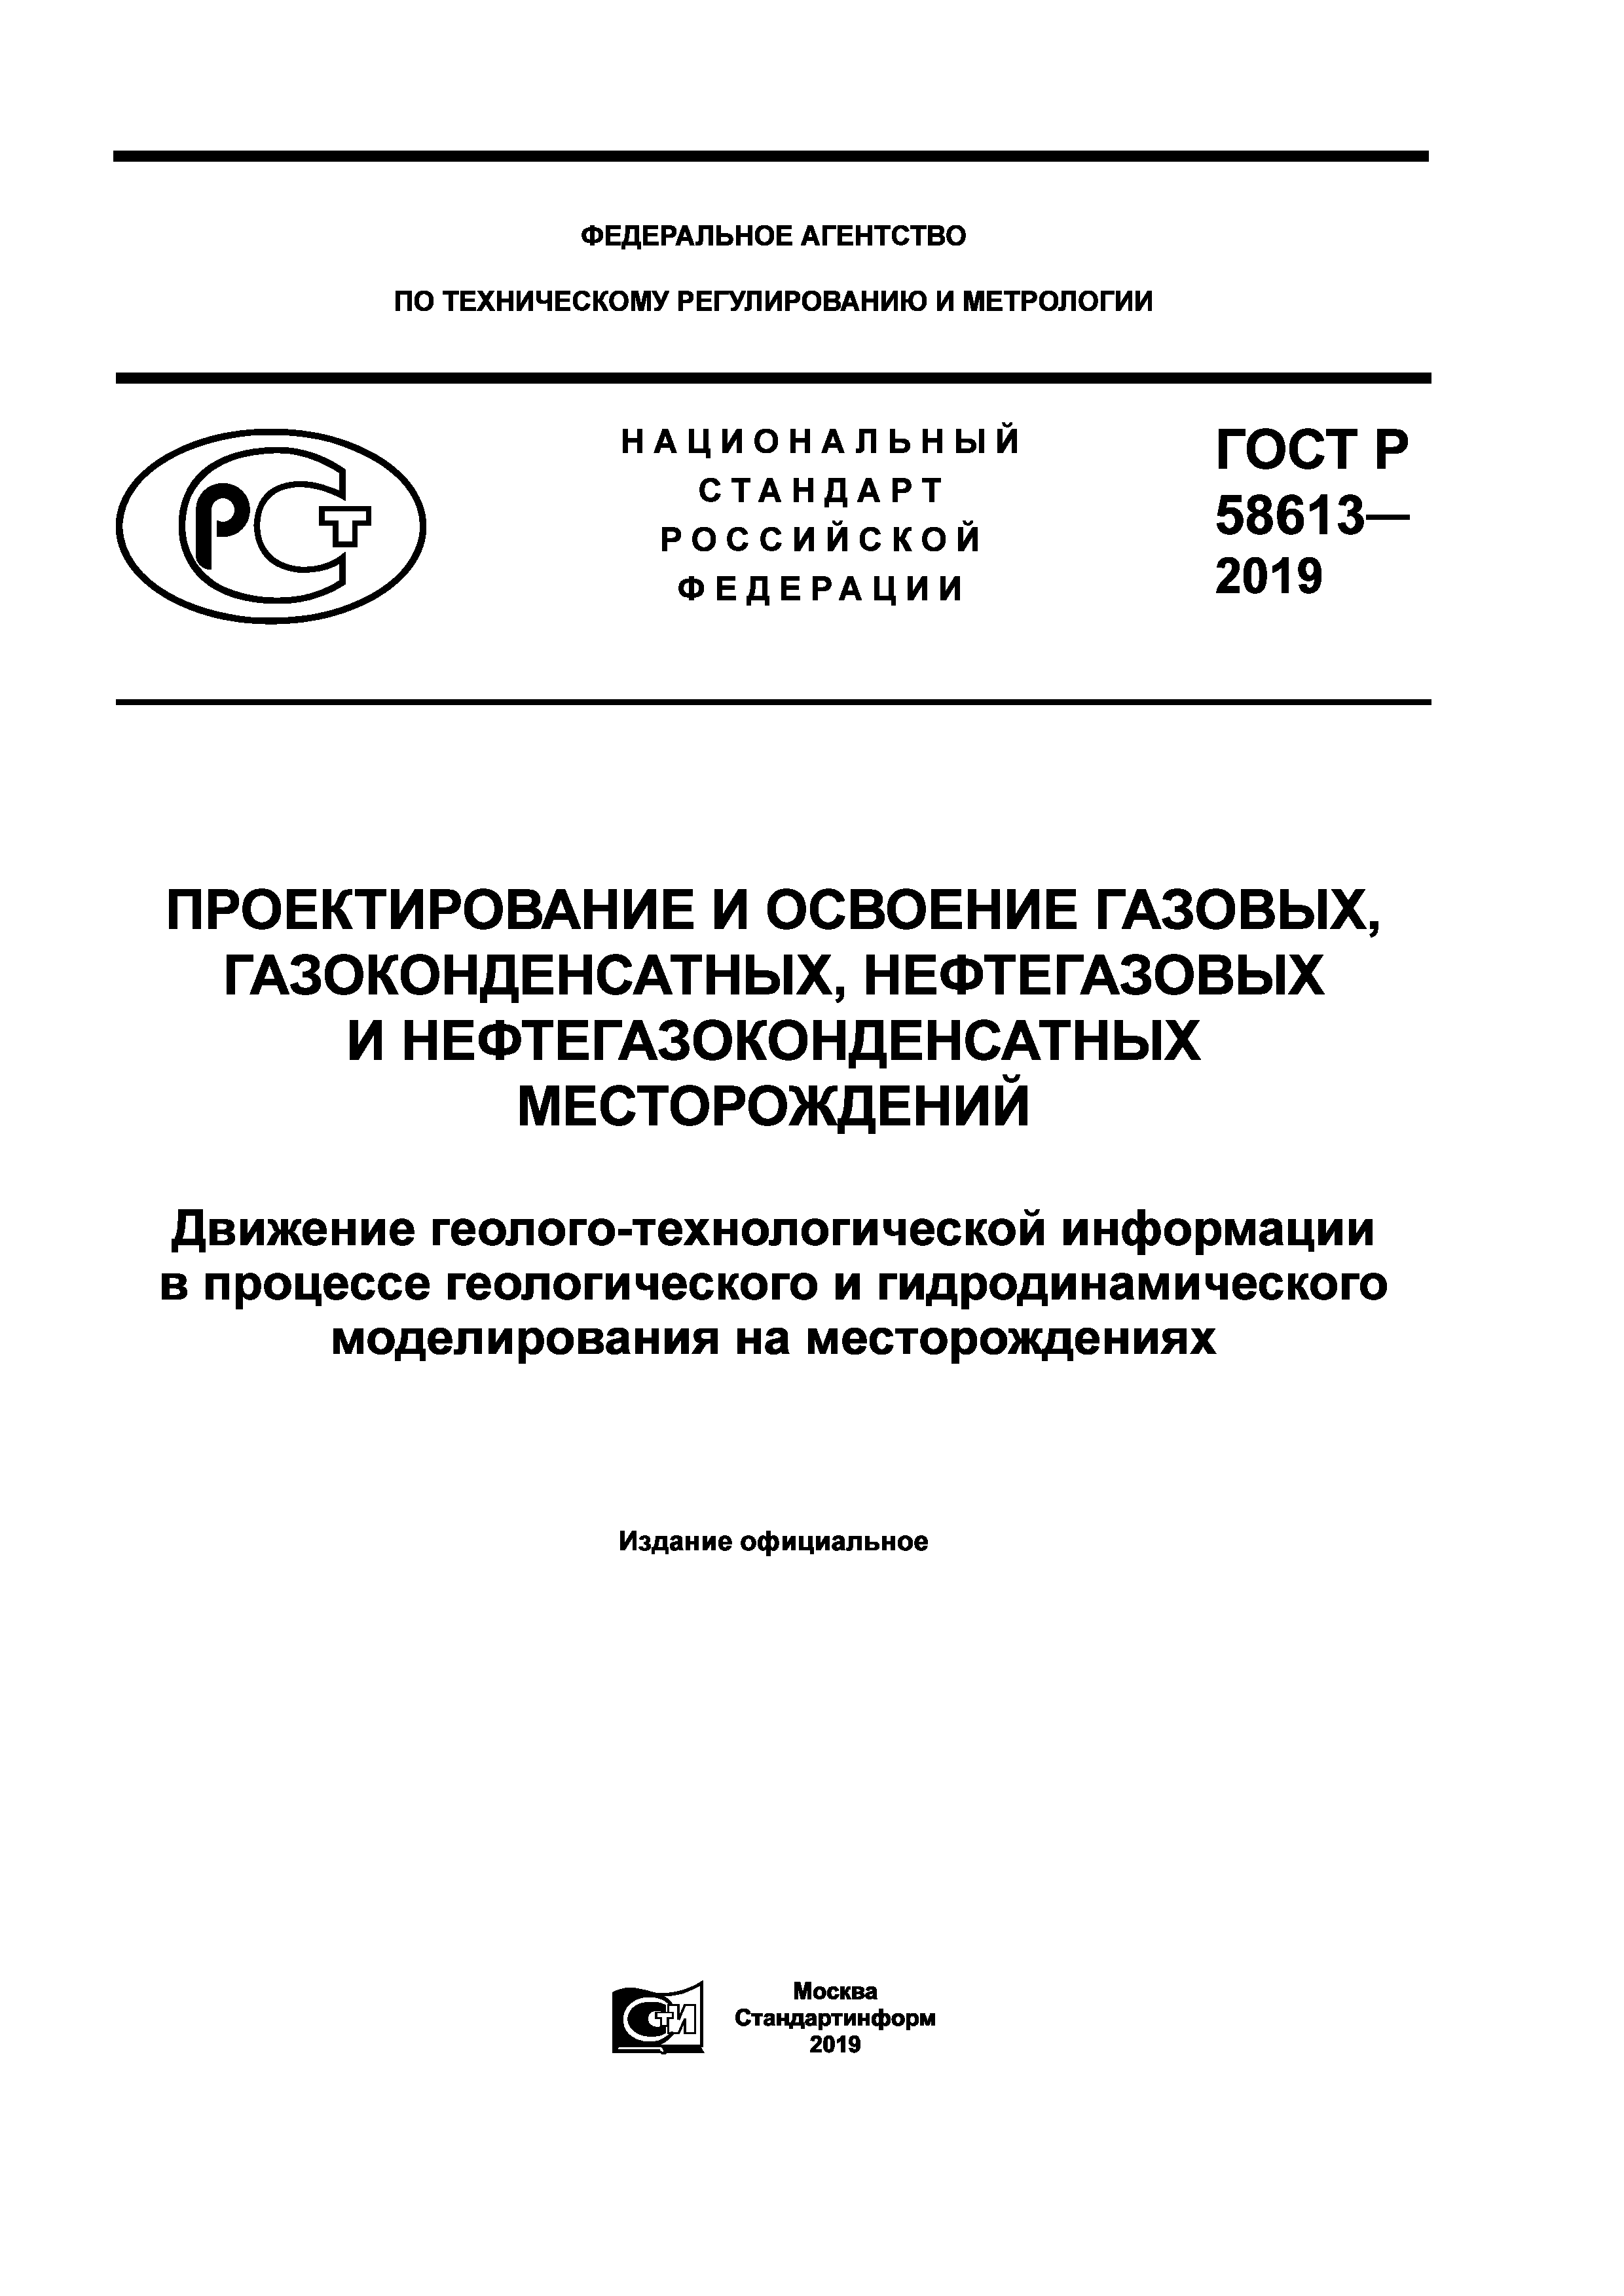 ГОСТ Р 58613-2019